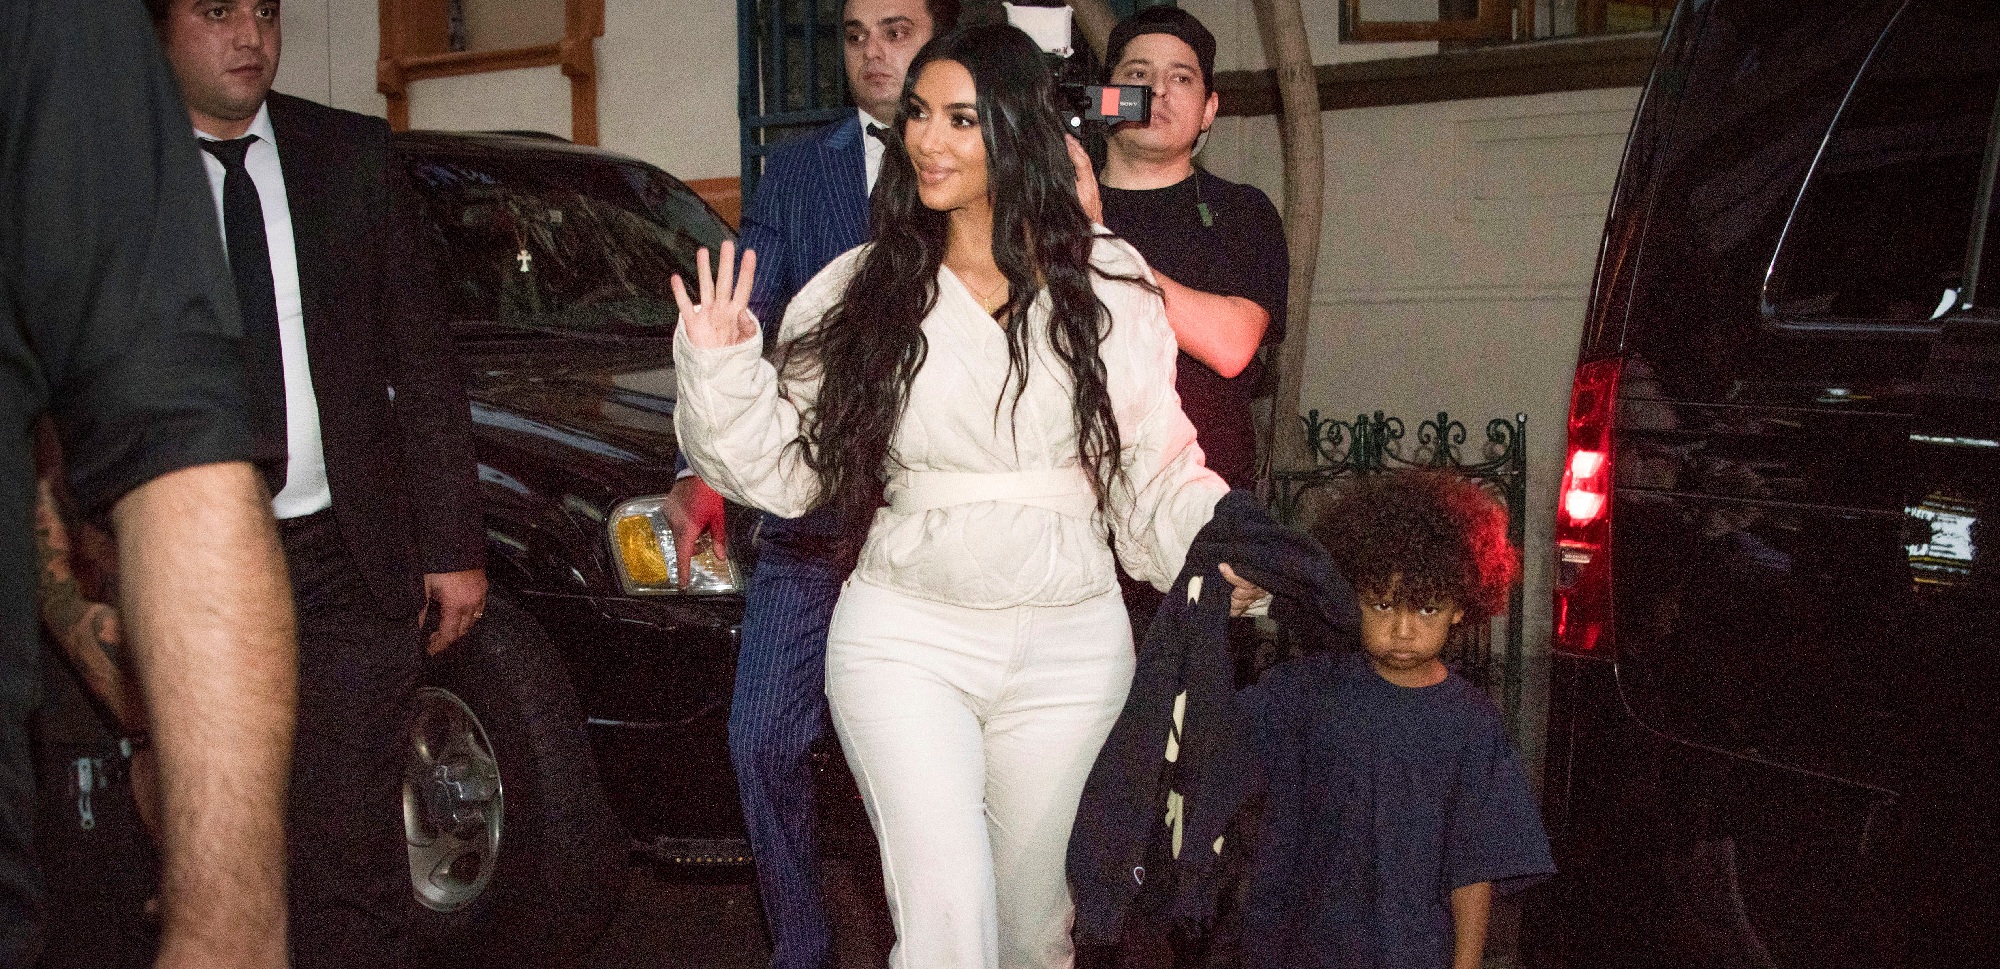 Kim Kardashian bautizó a sus hijos en Armenia: lució ajustado vestido en la ceremonia